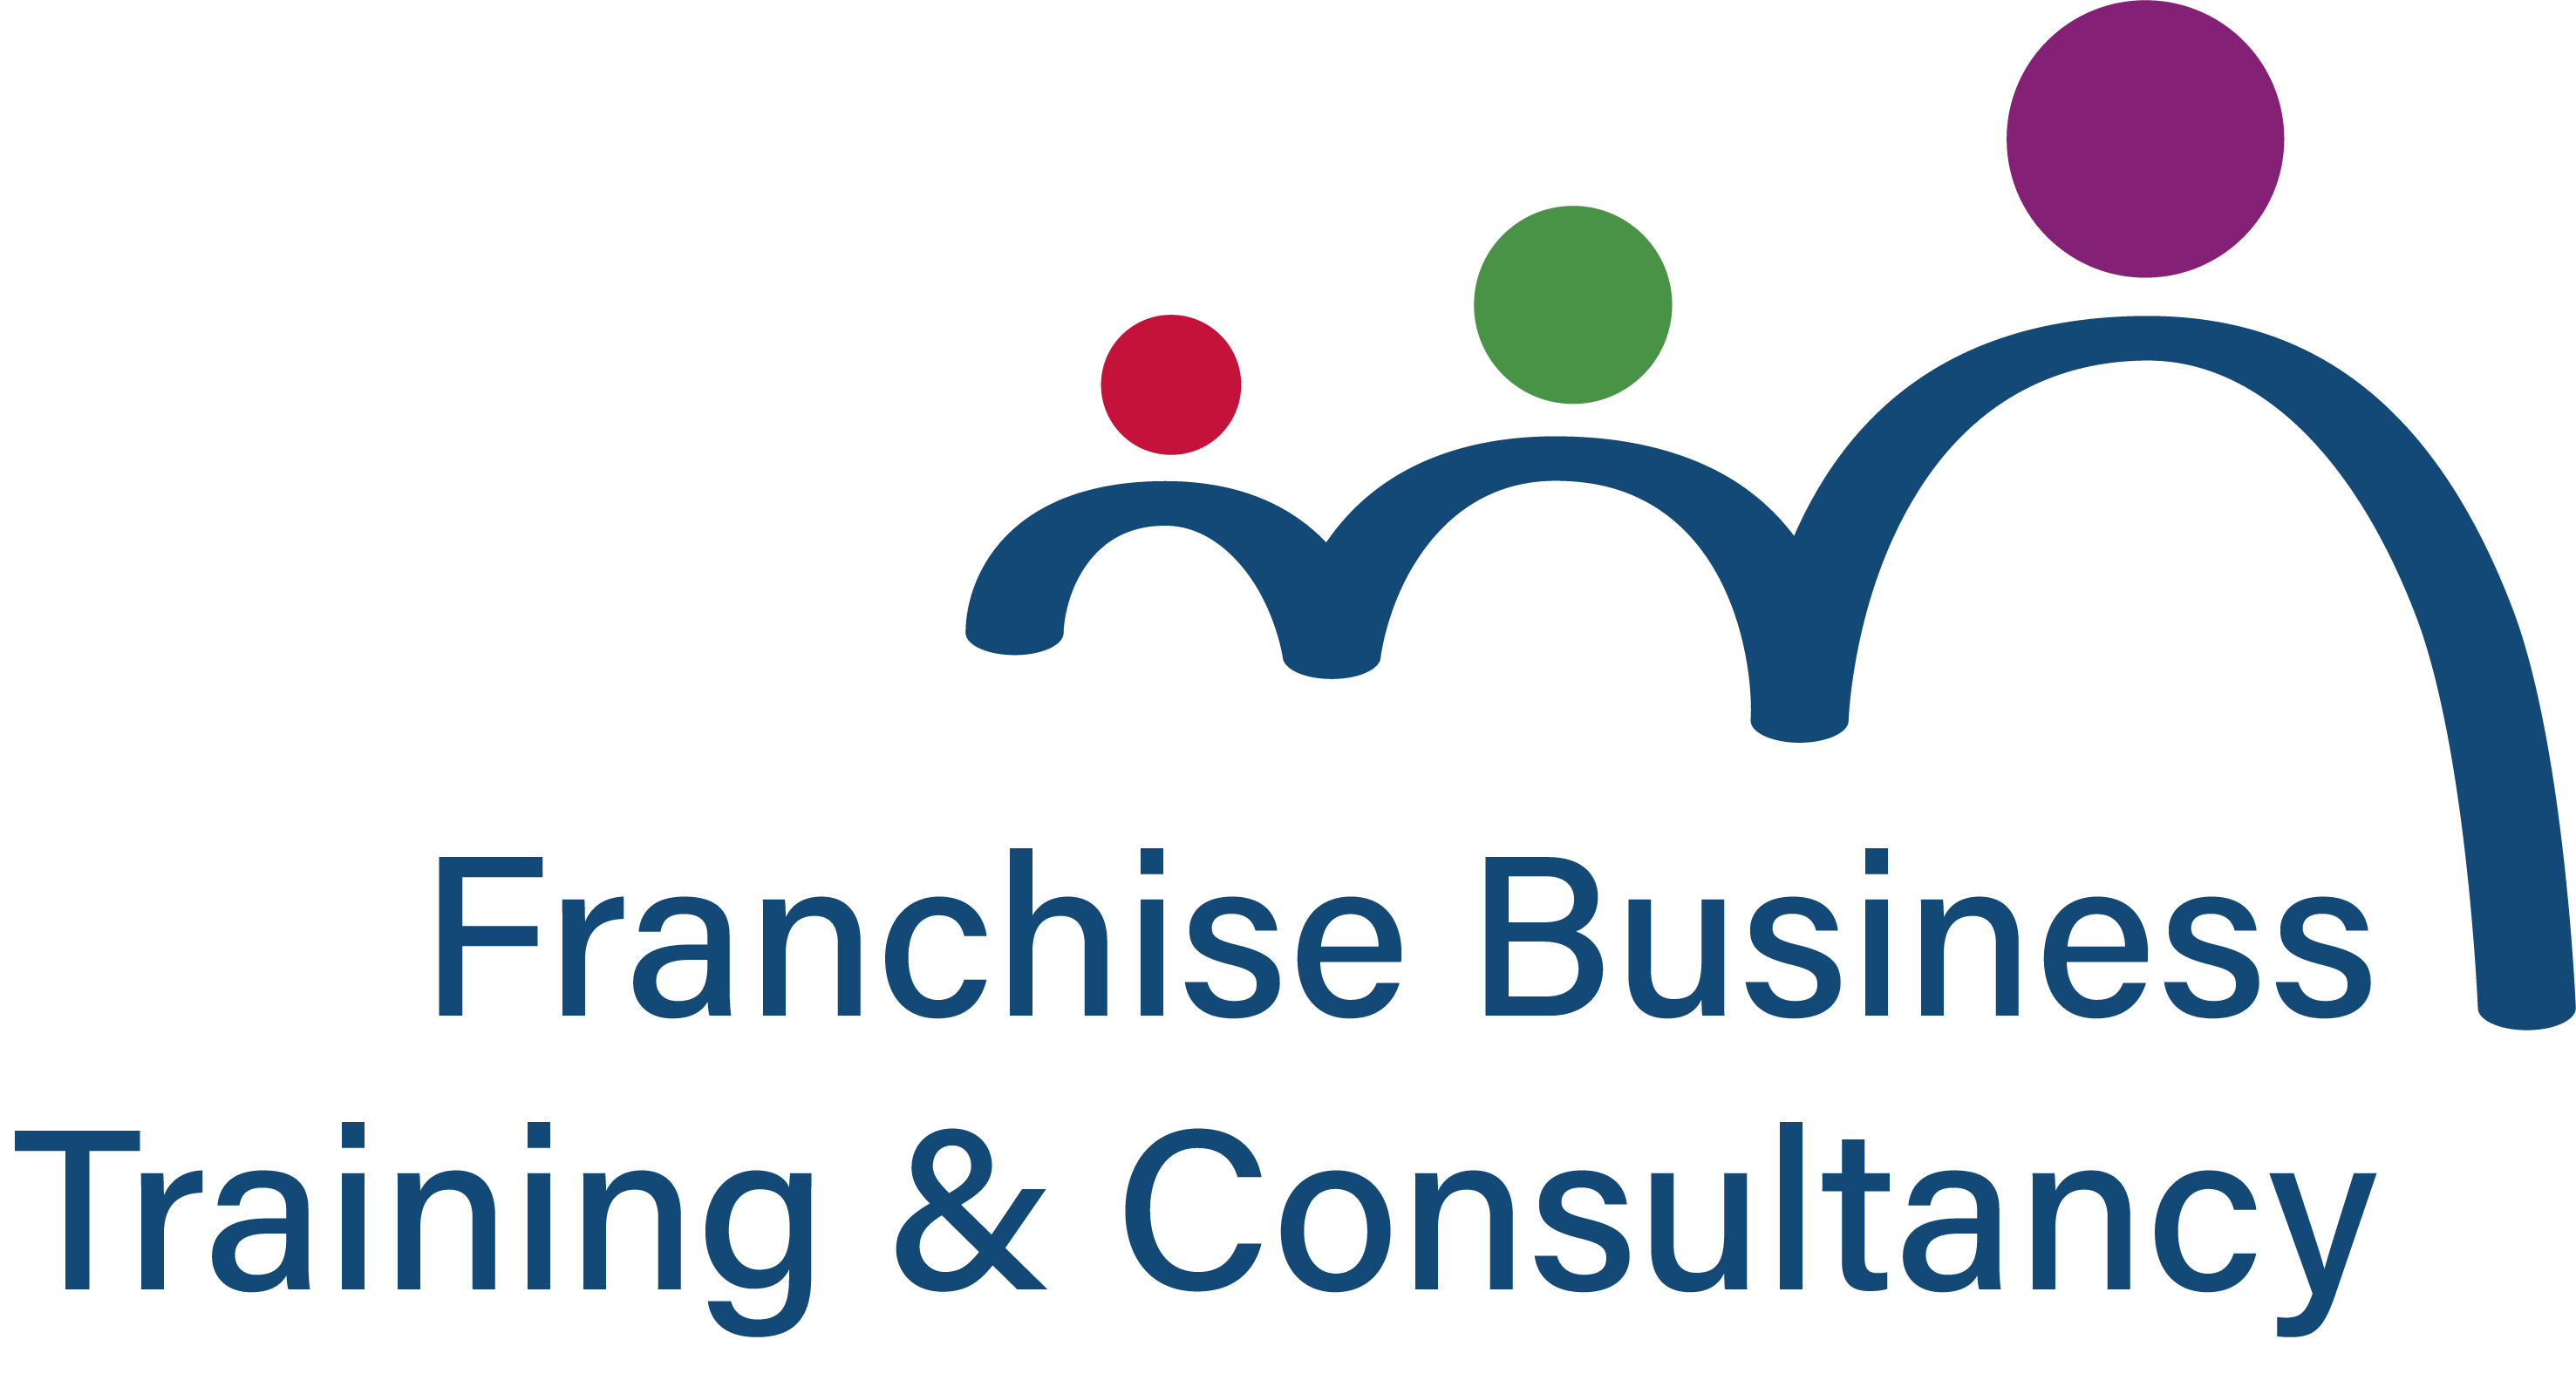 Franchise Business Training & Consultancy Ltd